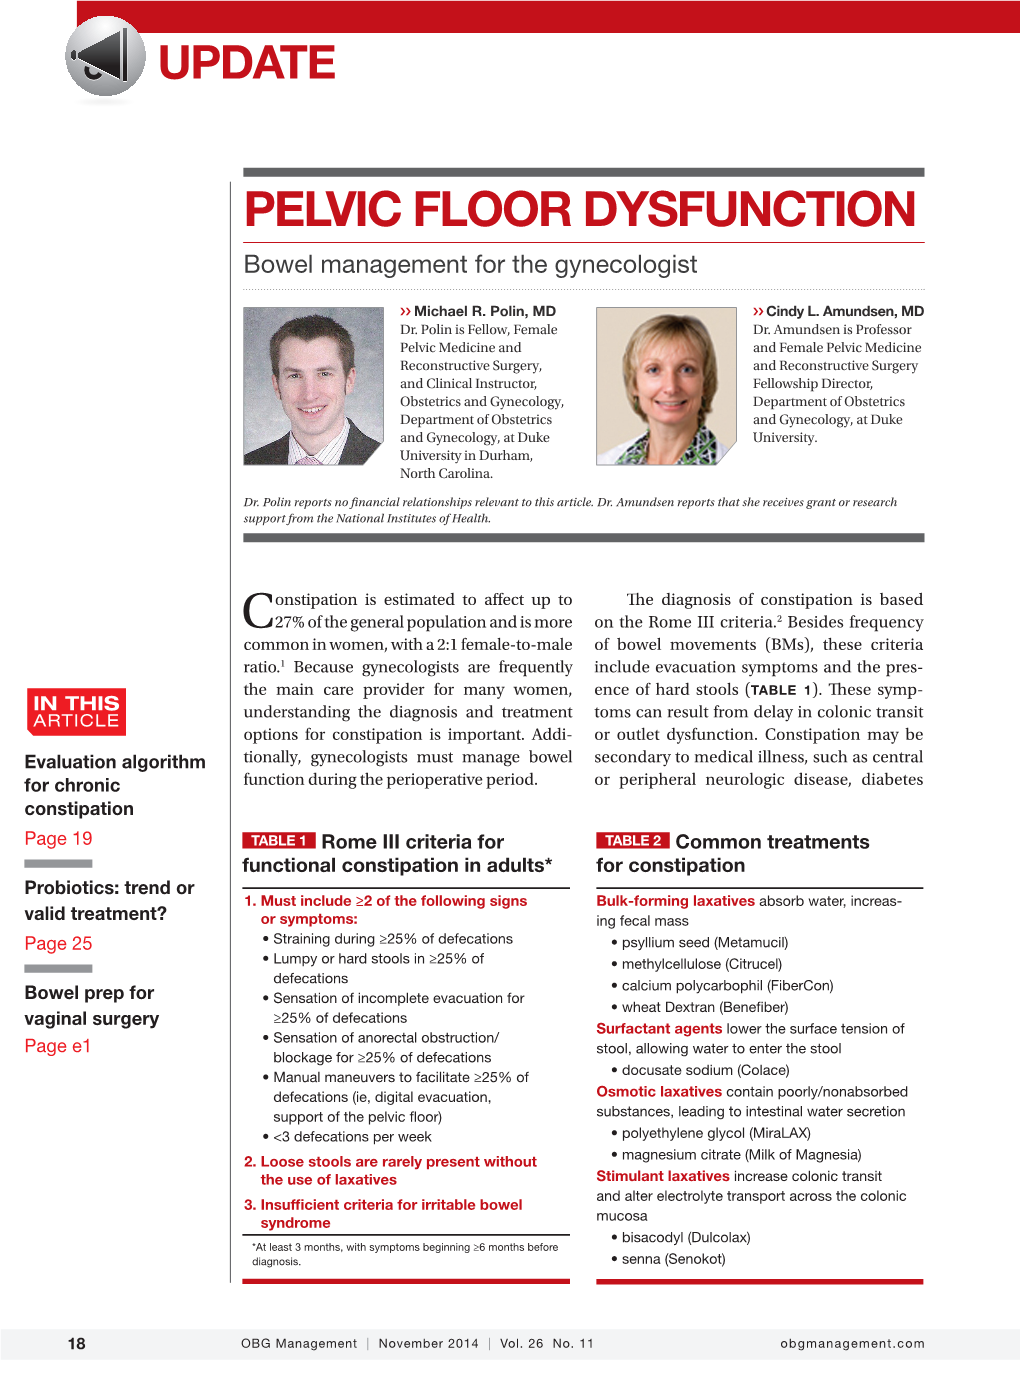 PELVIC FLOOR DYSFUNCTION Bowel Management for the Gynecologist